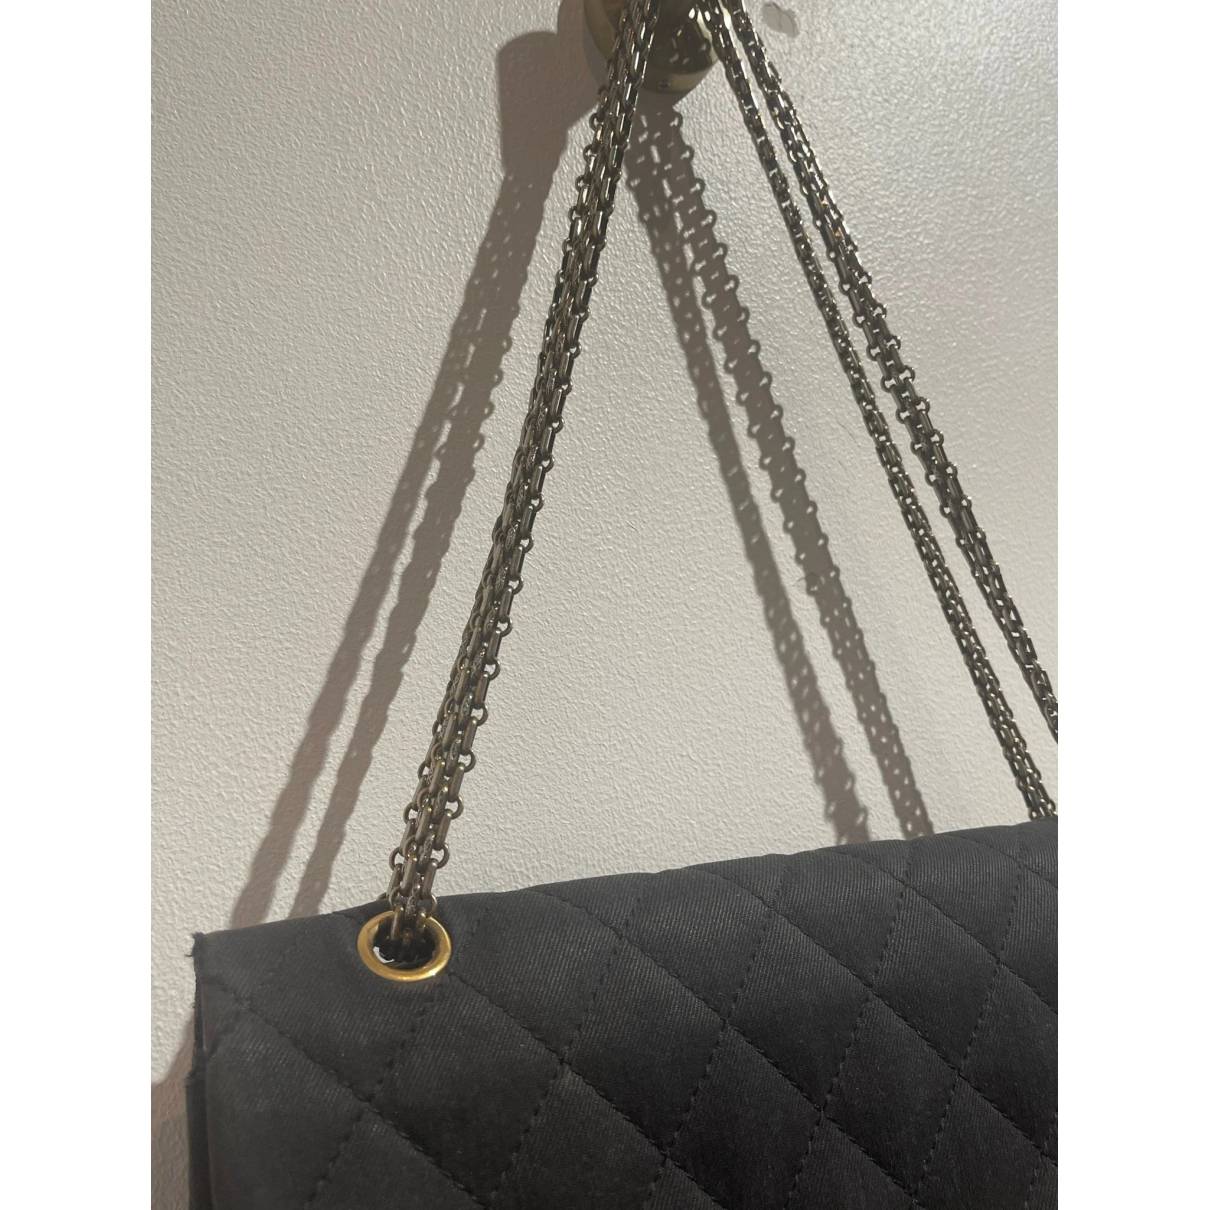 2.55 cloth handbag Chanel